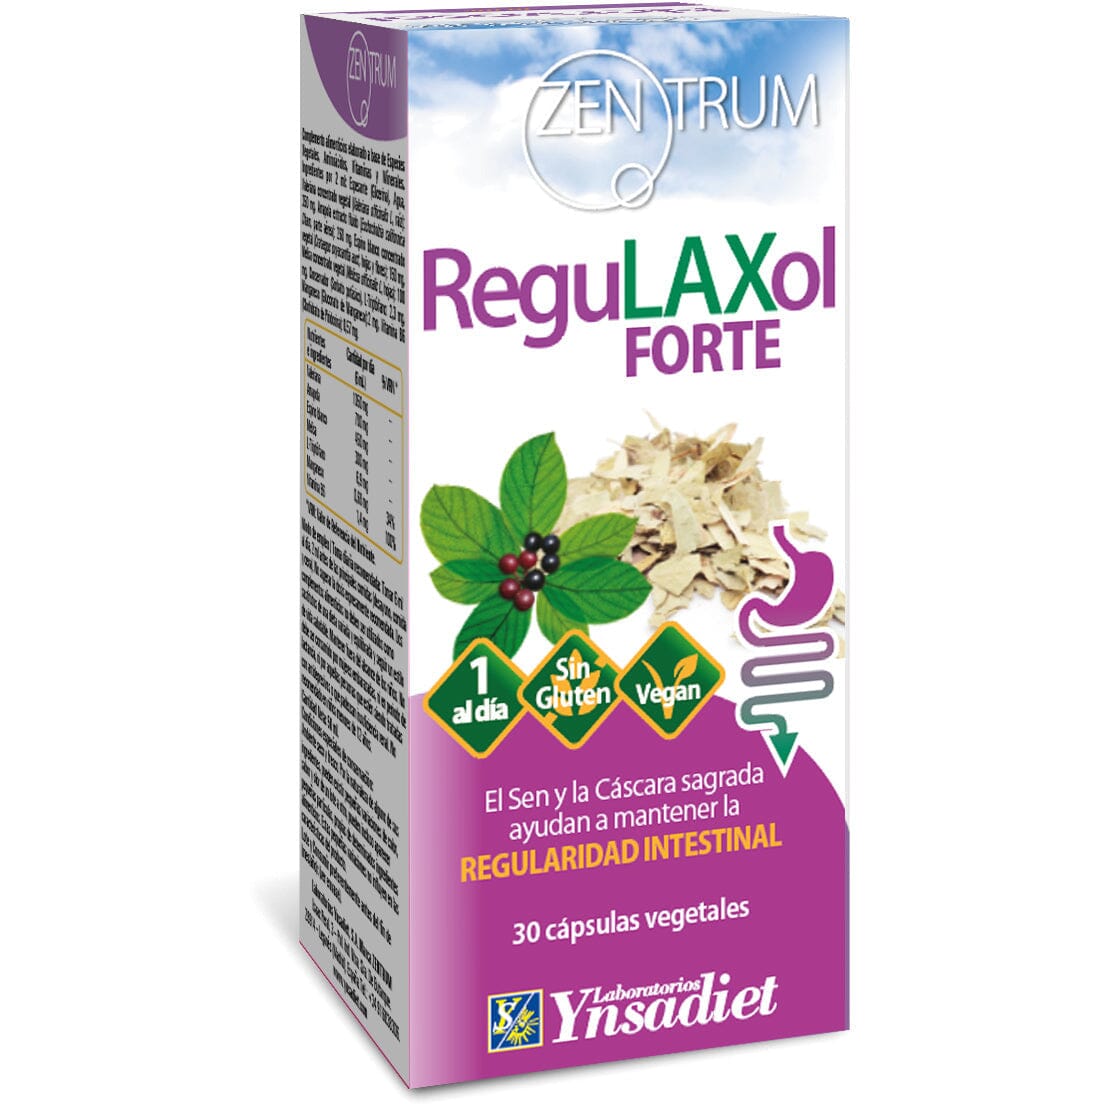 Regulaxol Forte 30 cápsulas | Ynsadiet - Dietetica Ferrer